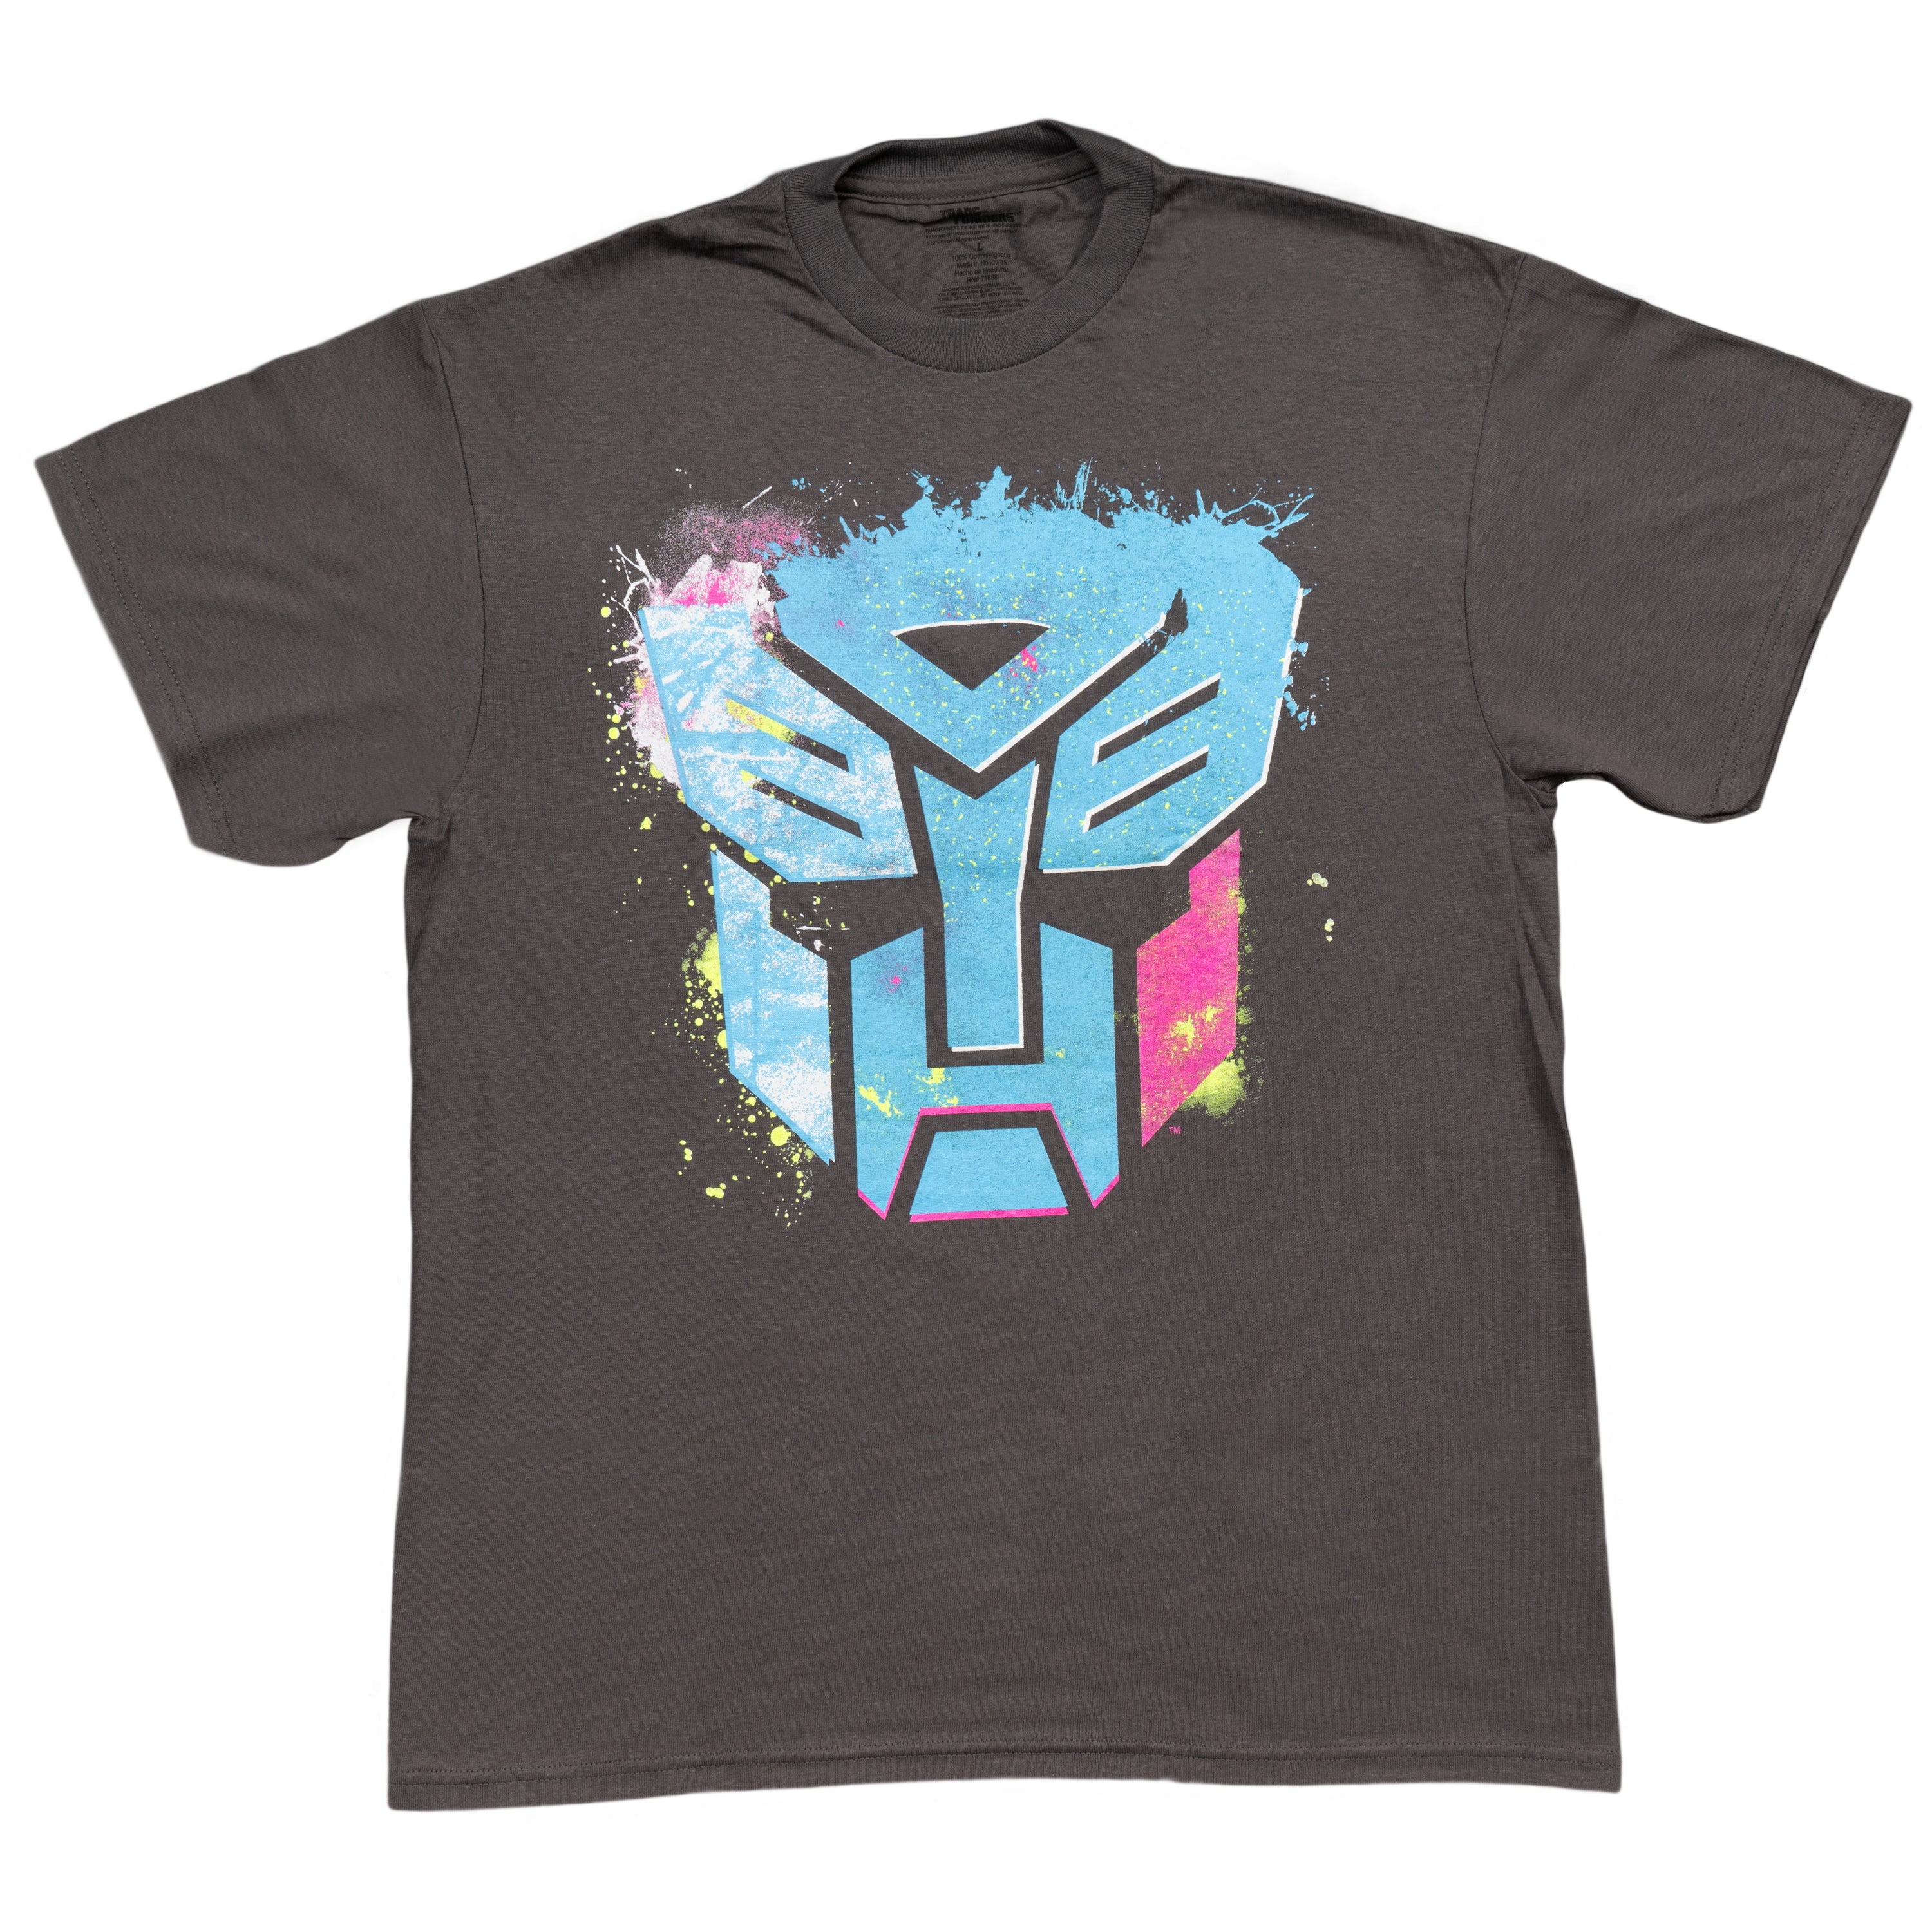 Transformers Autobots Splattered Paint Charcoal T-Shirt